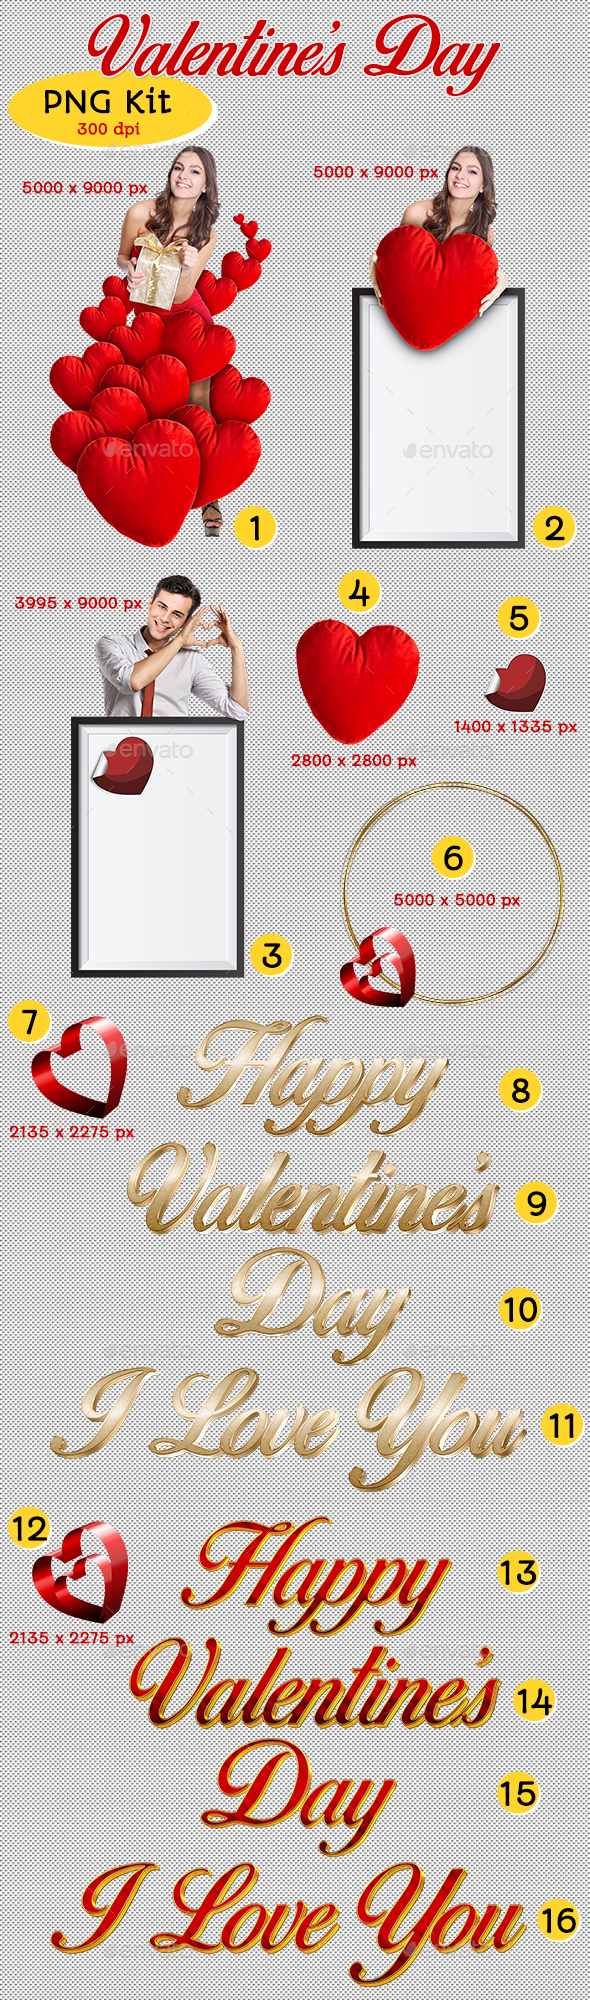 [DOWNLOAD]Valentines Day Kit